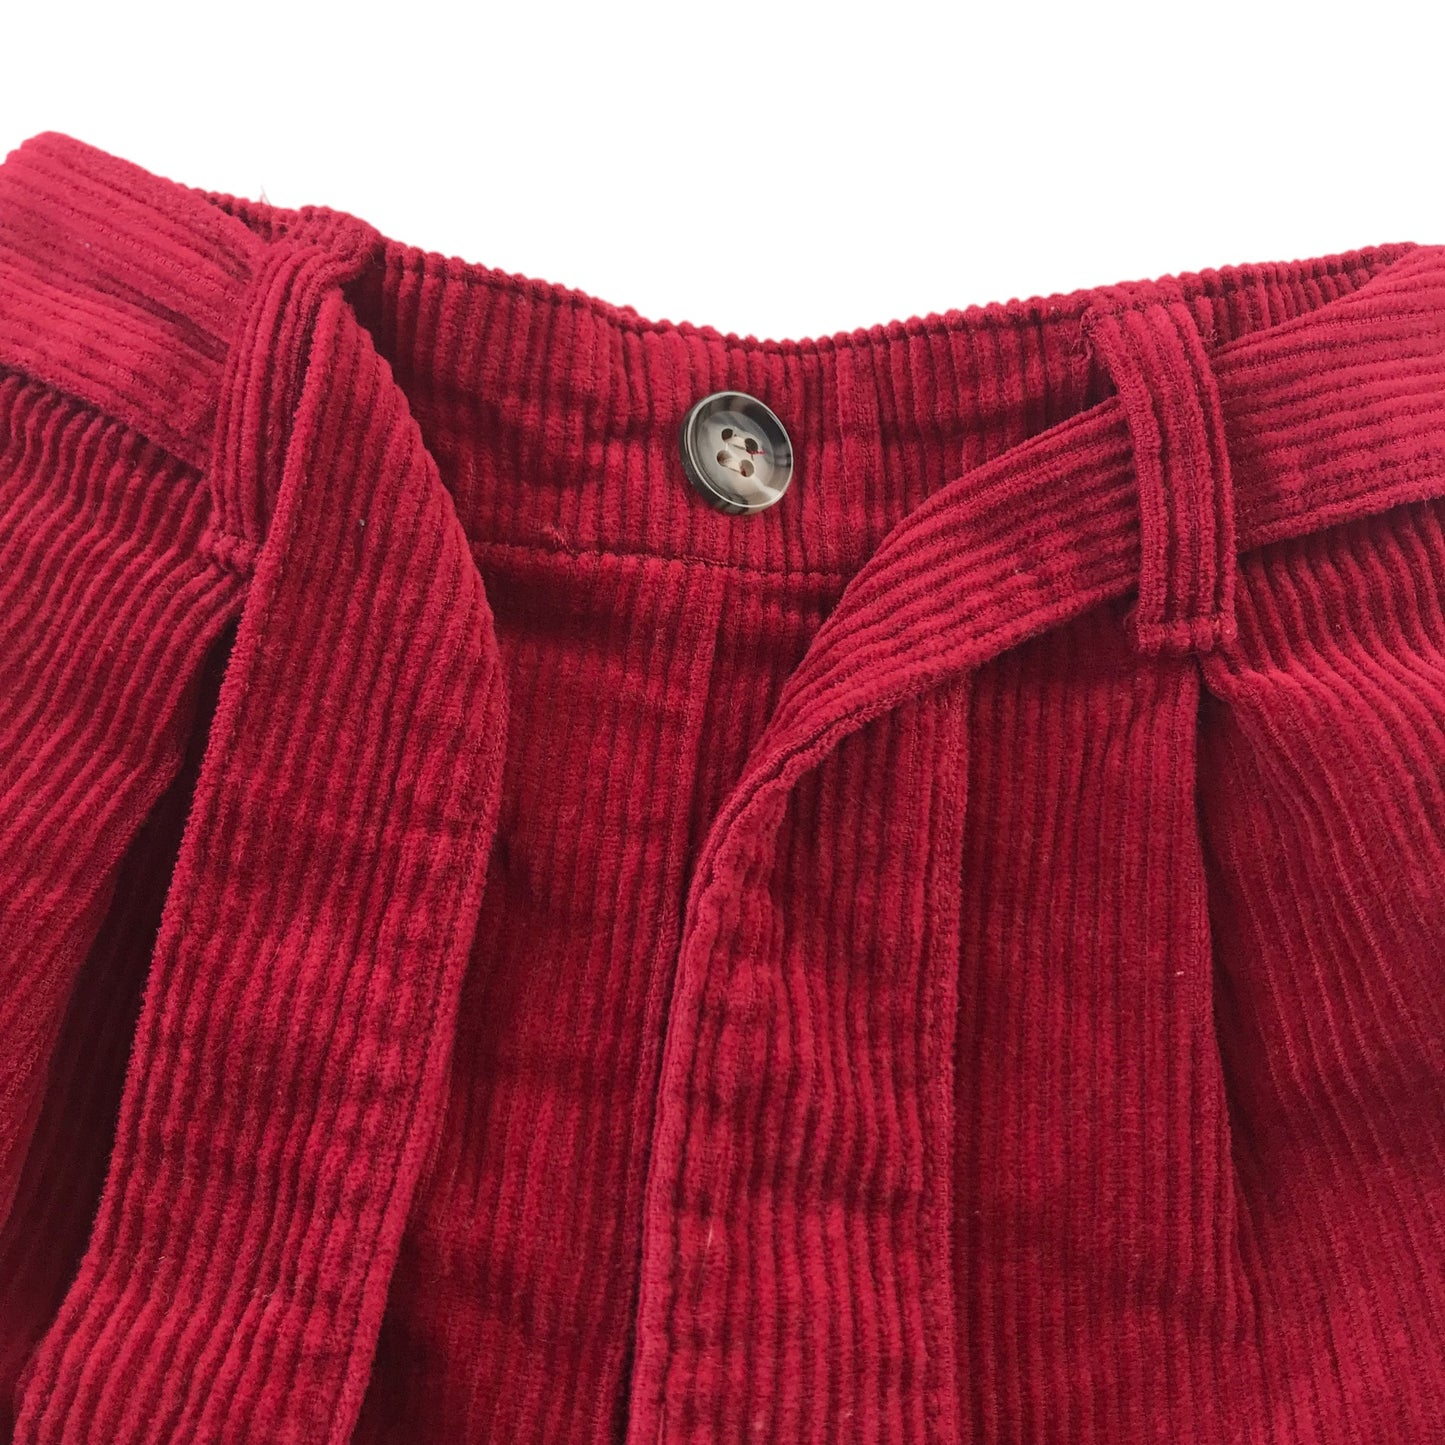 Nutmeg shorts 5-6 years Red Corduroy Belt Cotton